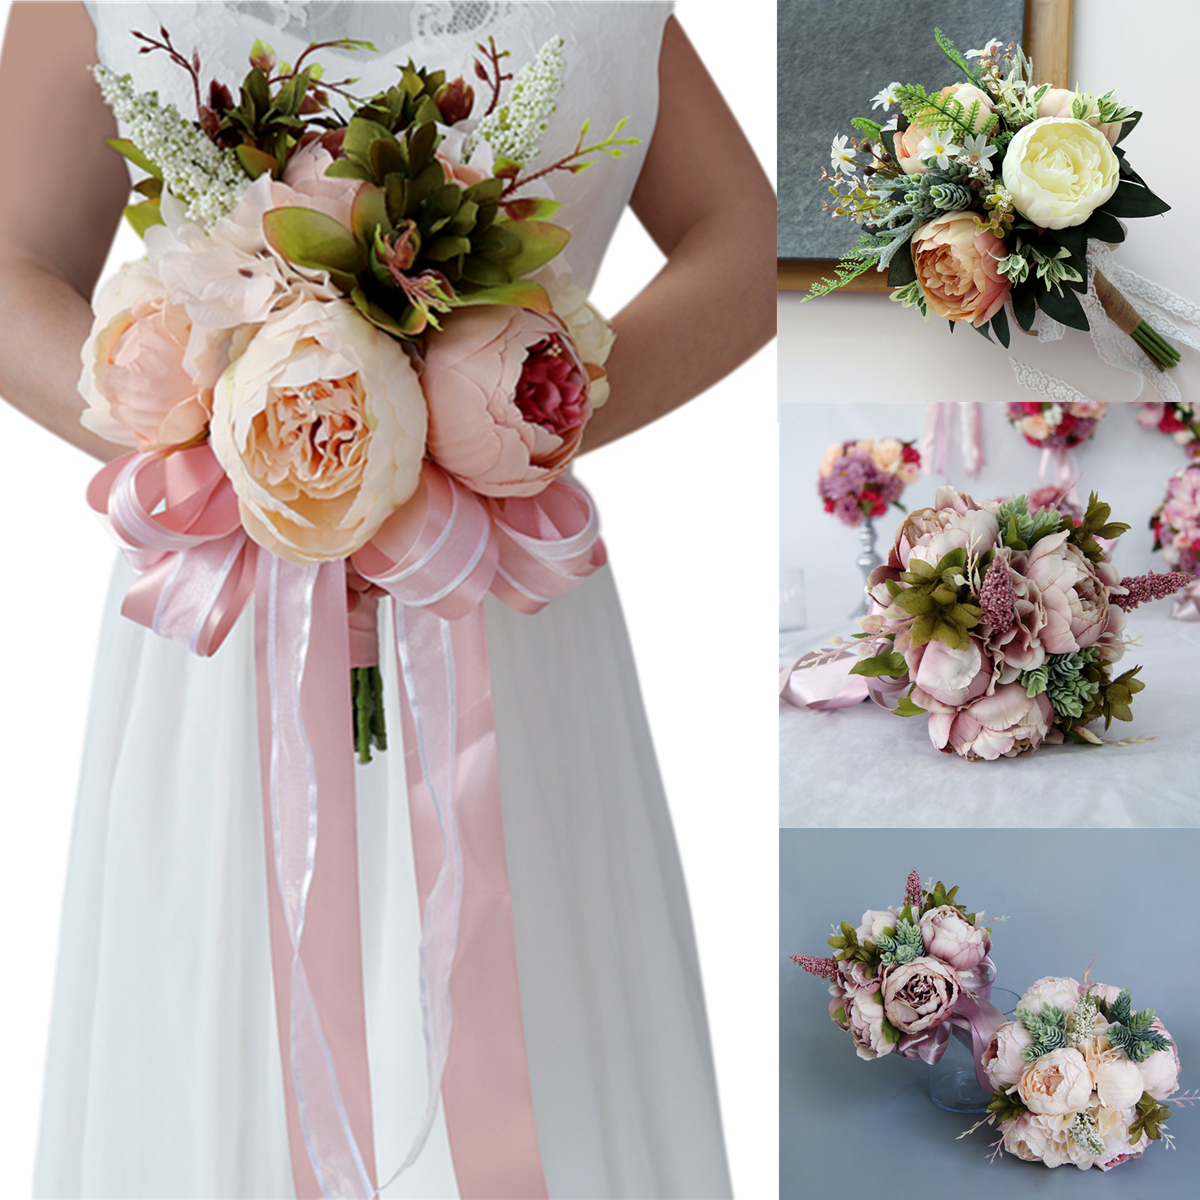 Wedding-Bridal-Bouquets-Handmade-Artificial-Flowers-Decorations-Bride-Accessories-1643090-1